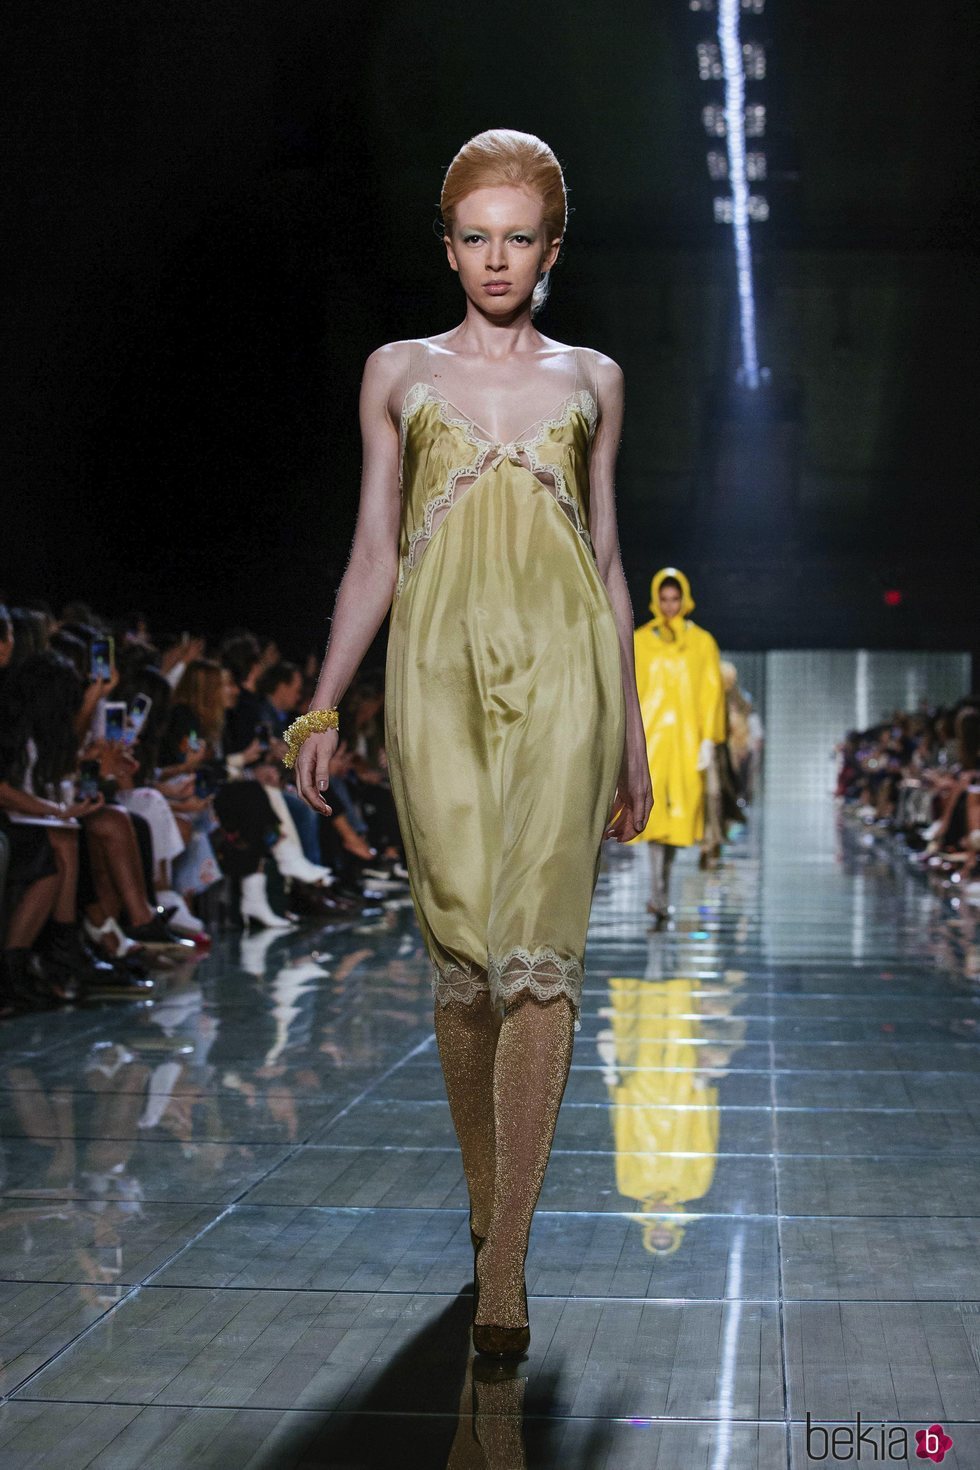 Vestido lencero de Marc Jacobs primavera 2019 en la New York Fashion Week